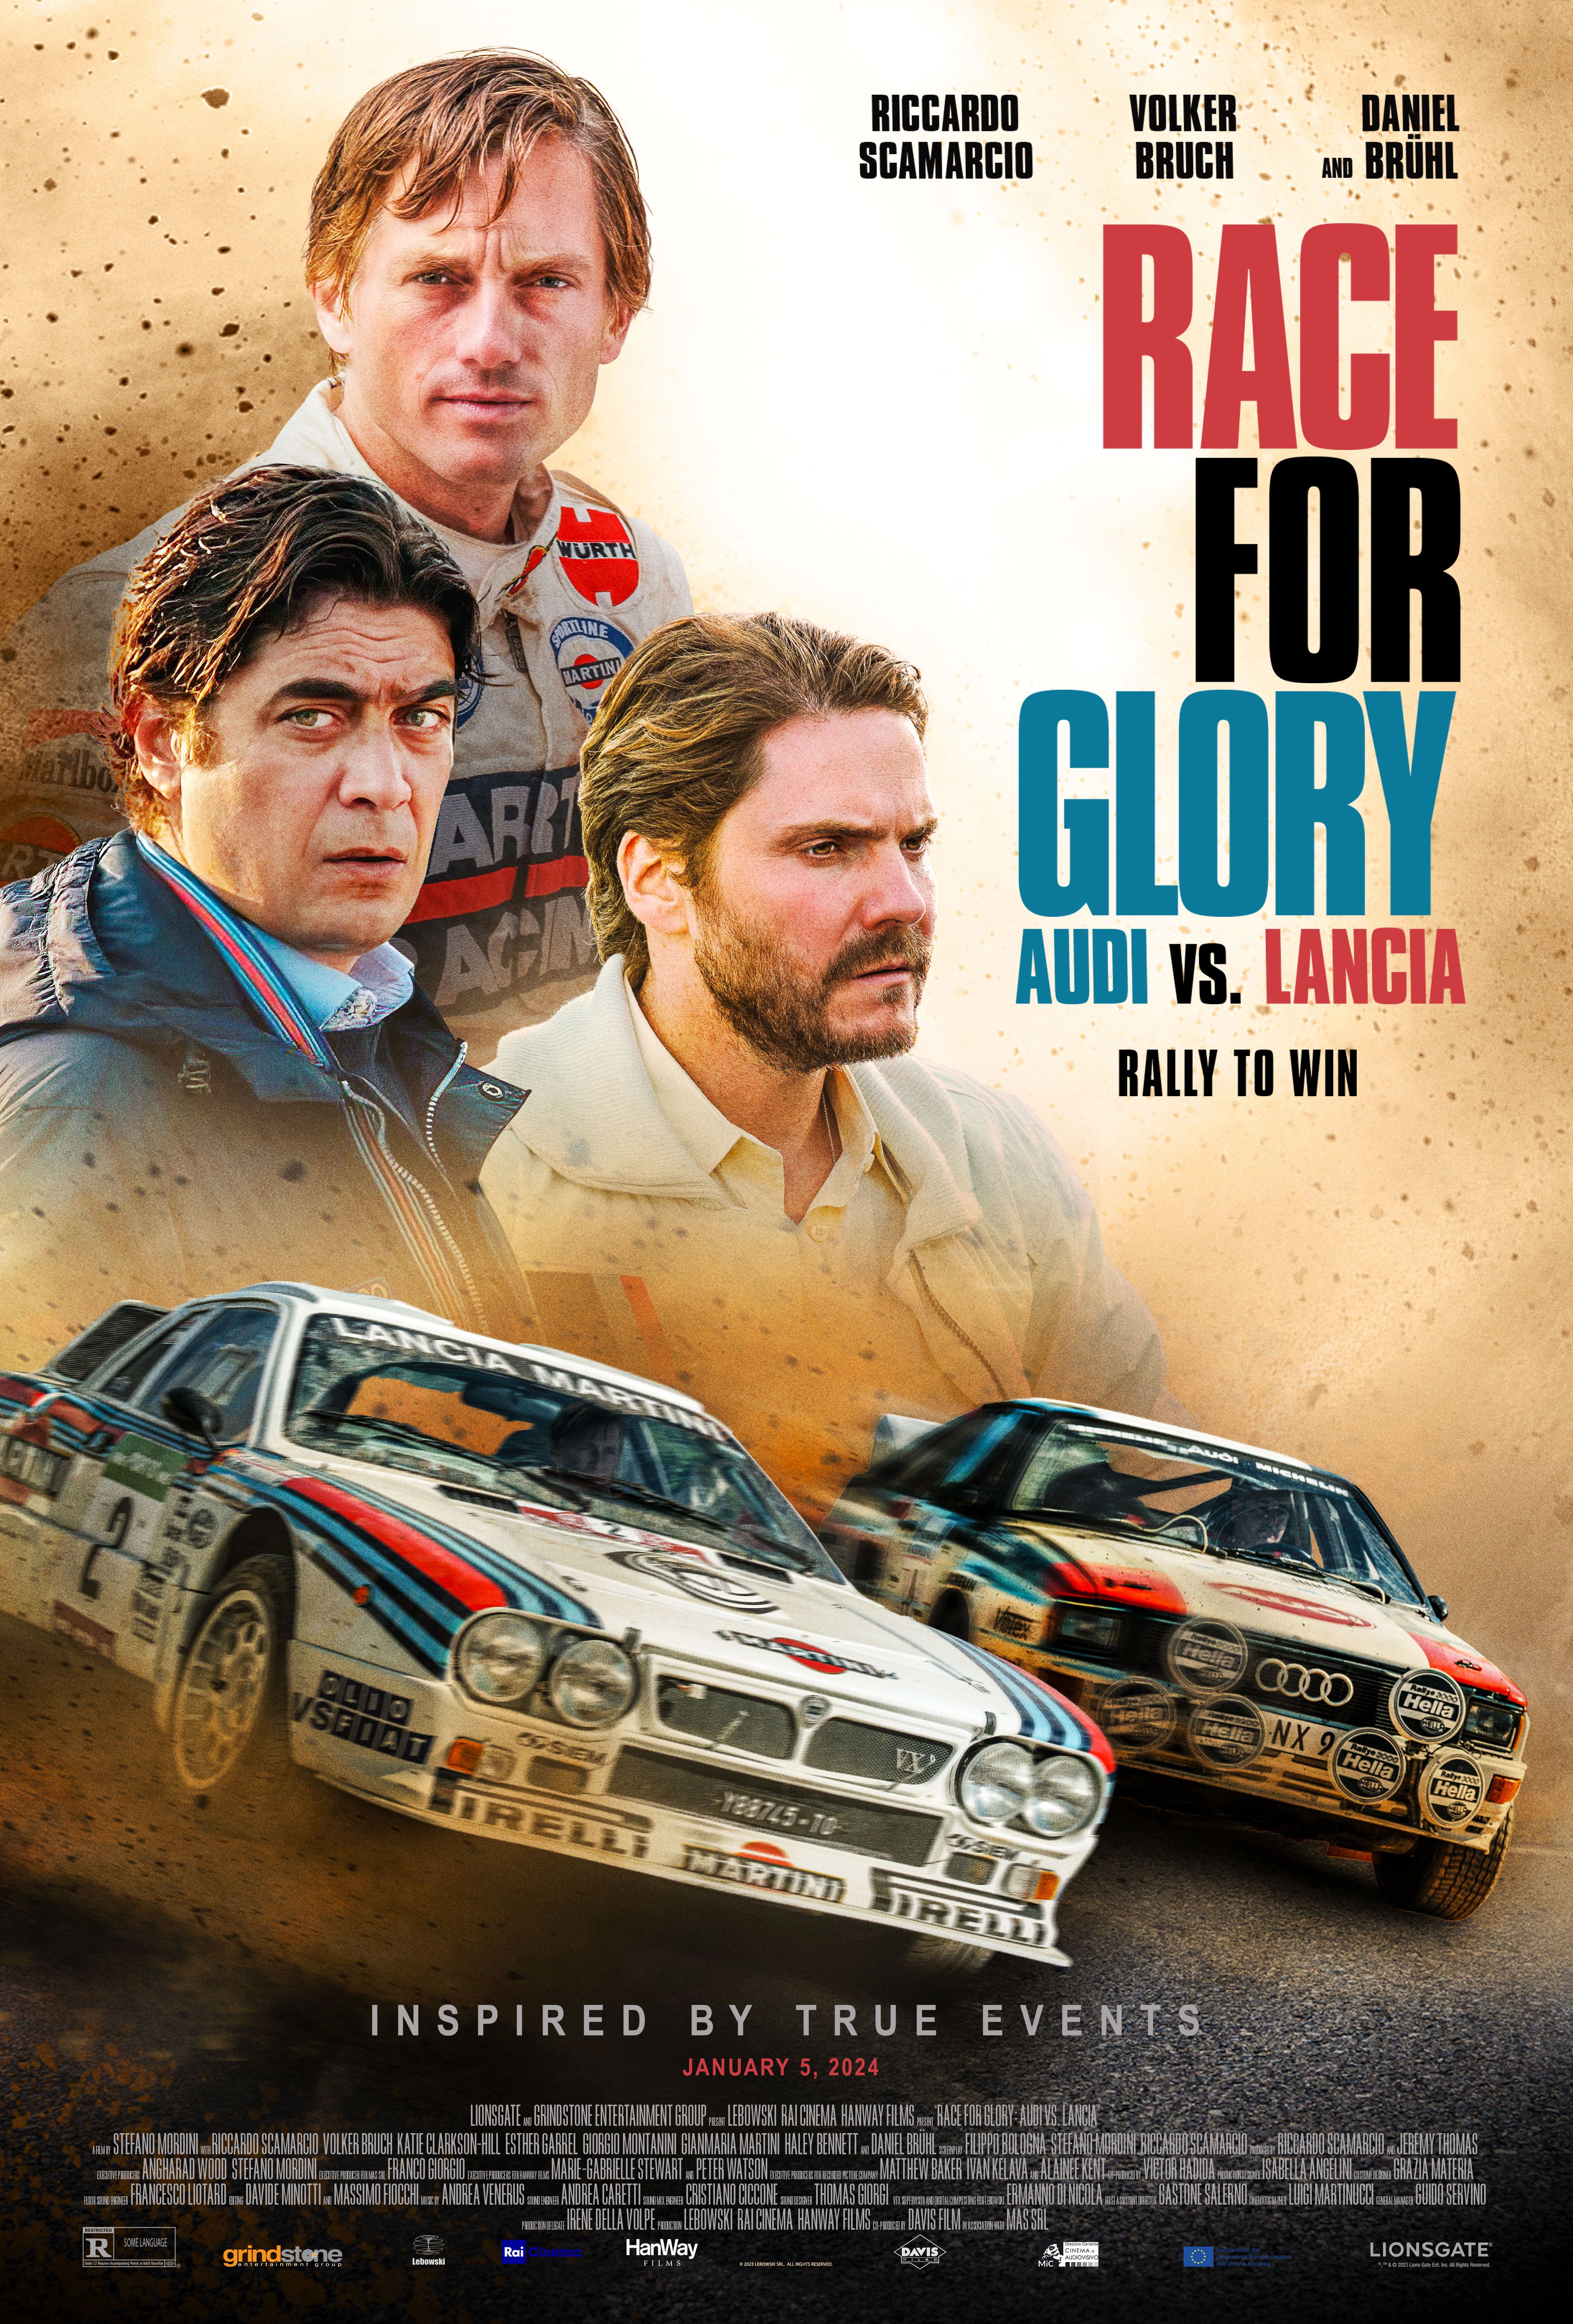 Daniel Brühl, Riccardo Scamarcio and Volker Bruch on the poster for ``Race for Glory: Audi vs. Lancia''. 